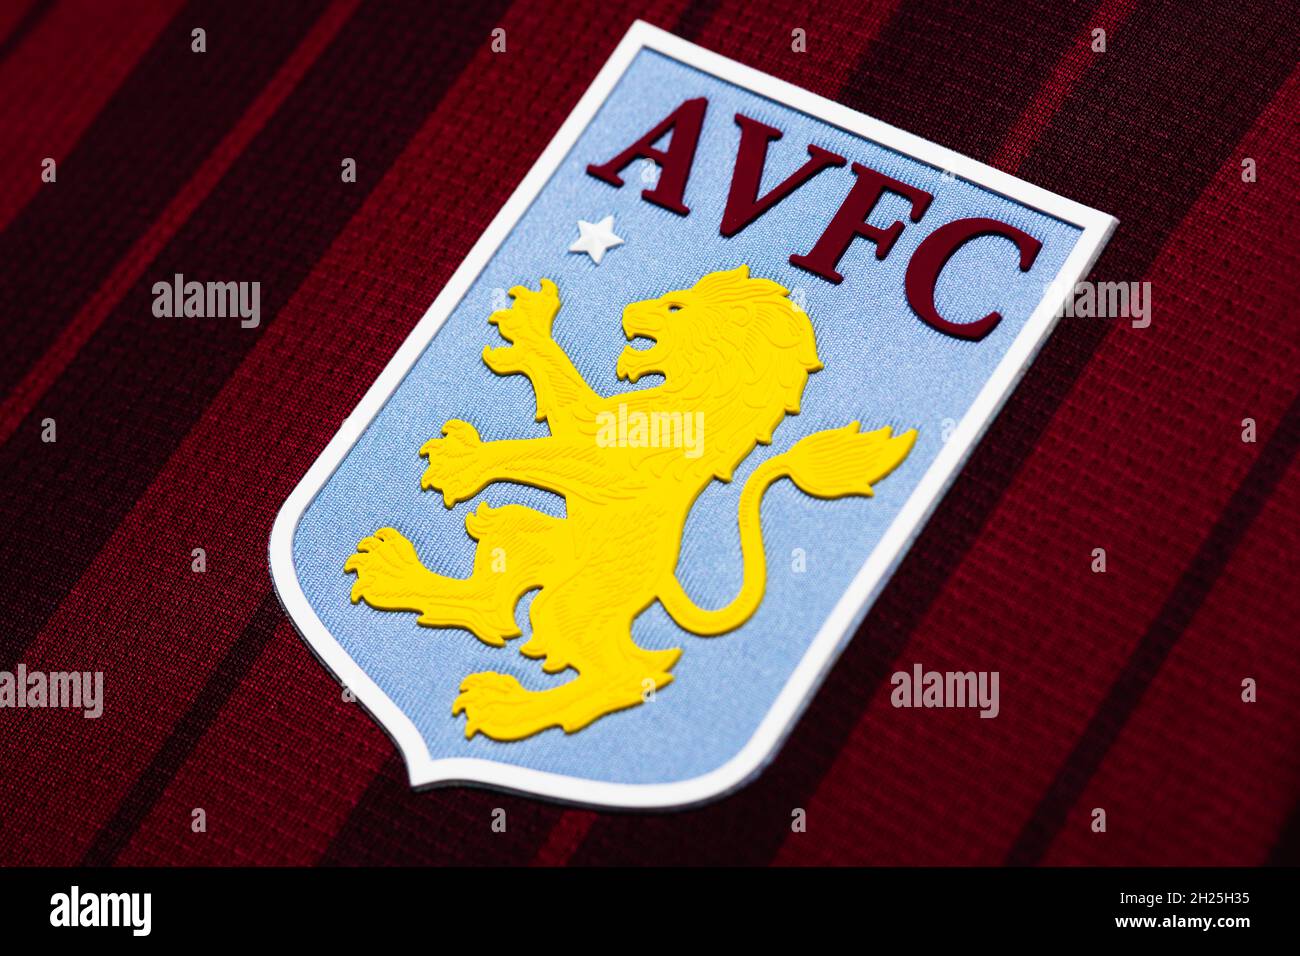 Close up of Aston VIlla club crest. Stock Photo